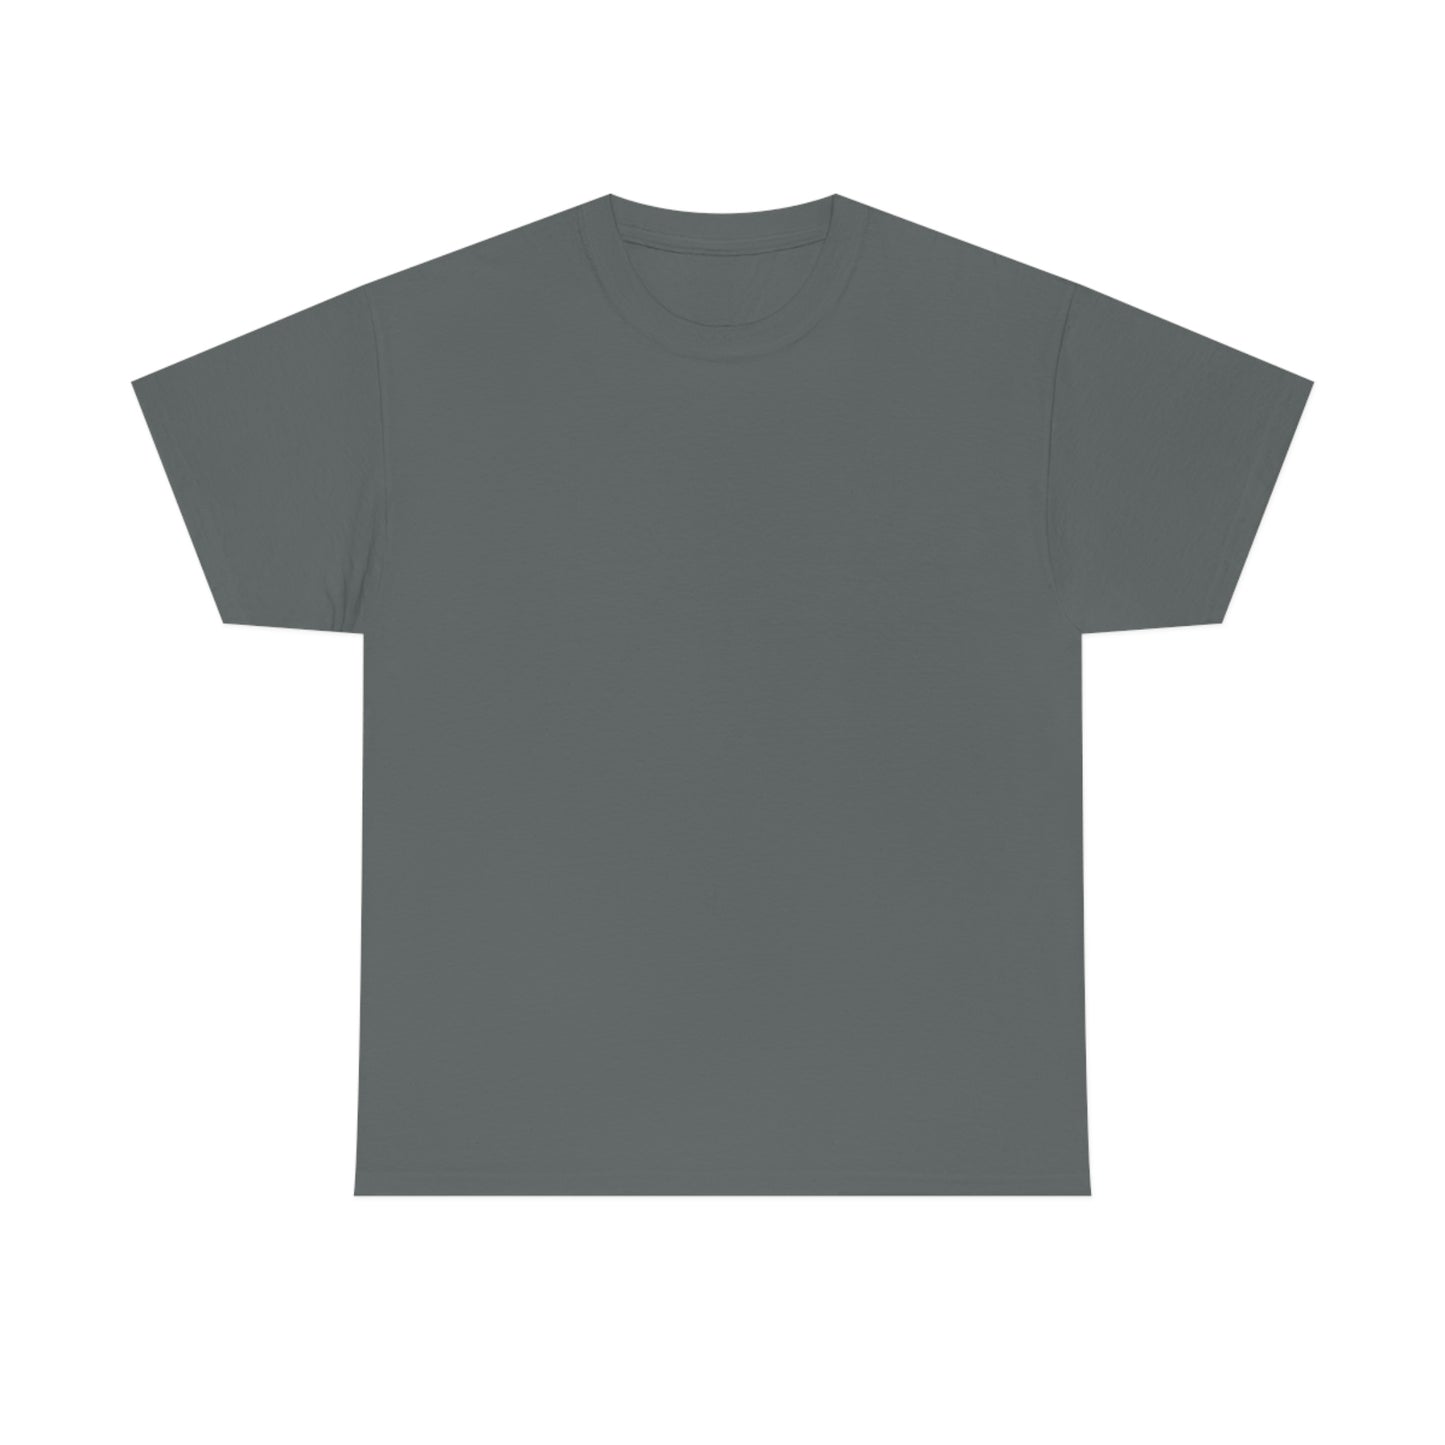 RCSFORJC  White Logo  Back T-Shirt 10 colors  S-5x